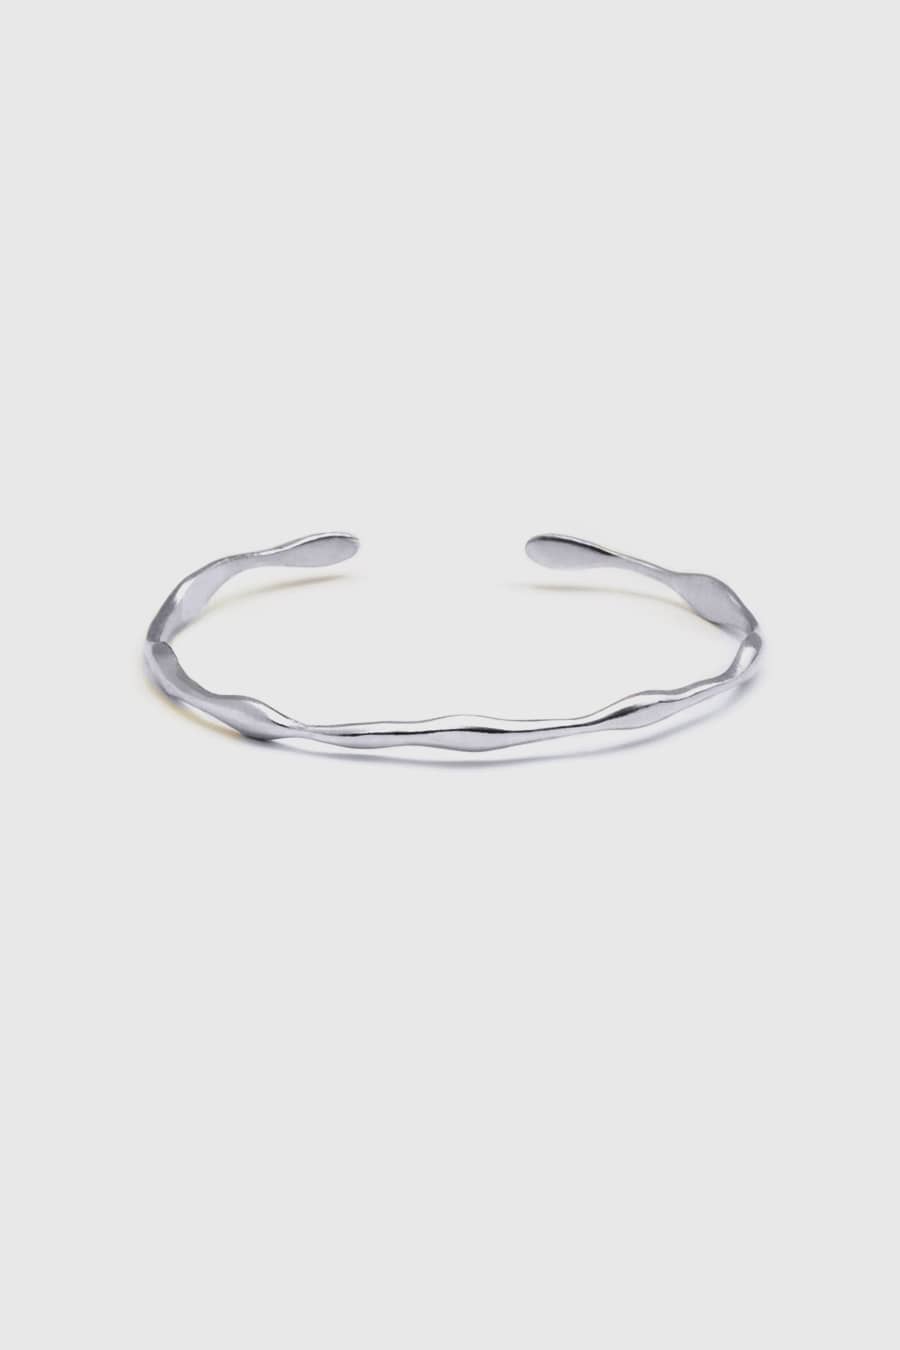 laoma-bracelet-wavy1